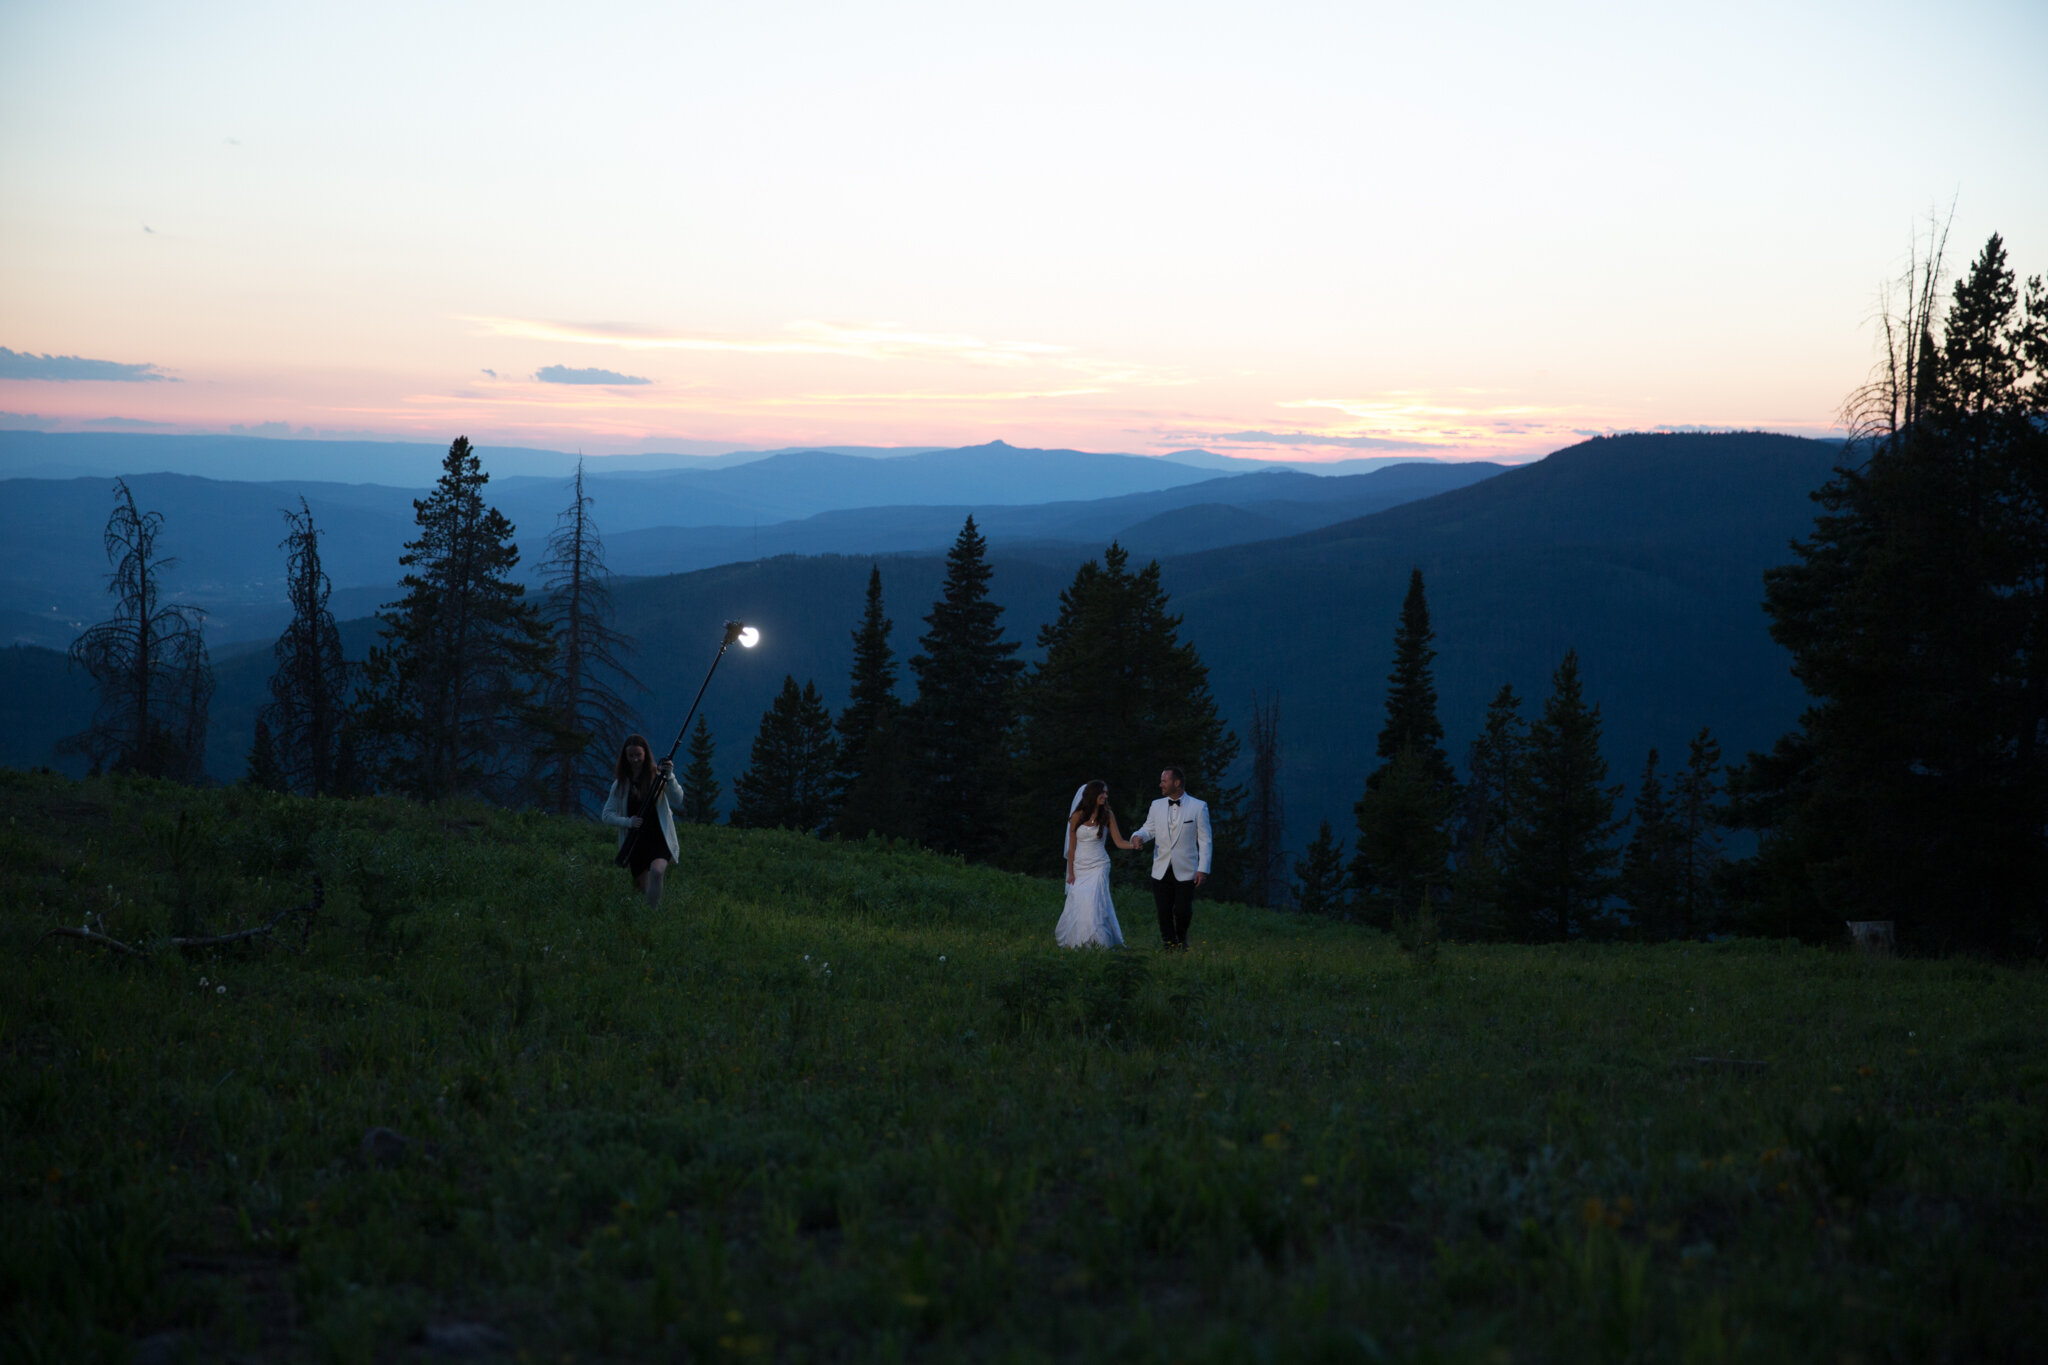  Vail Colorado Wedding | Bride and groom mountain top sunset | Colorado wedding photographer | © JMGant Photography | http://www.jmgantphotography.com/ 